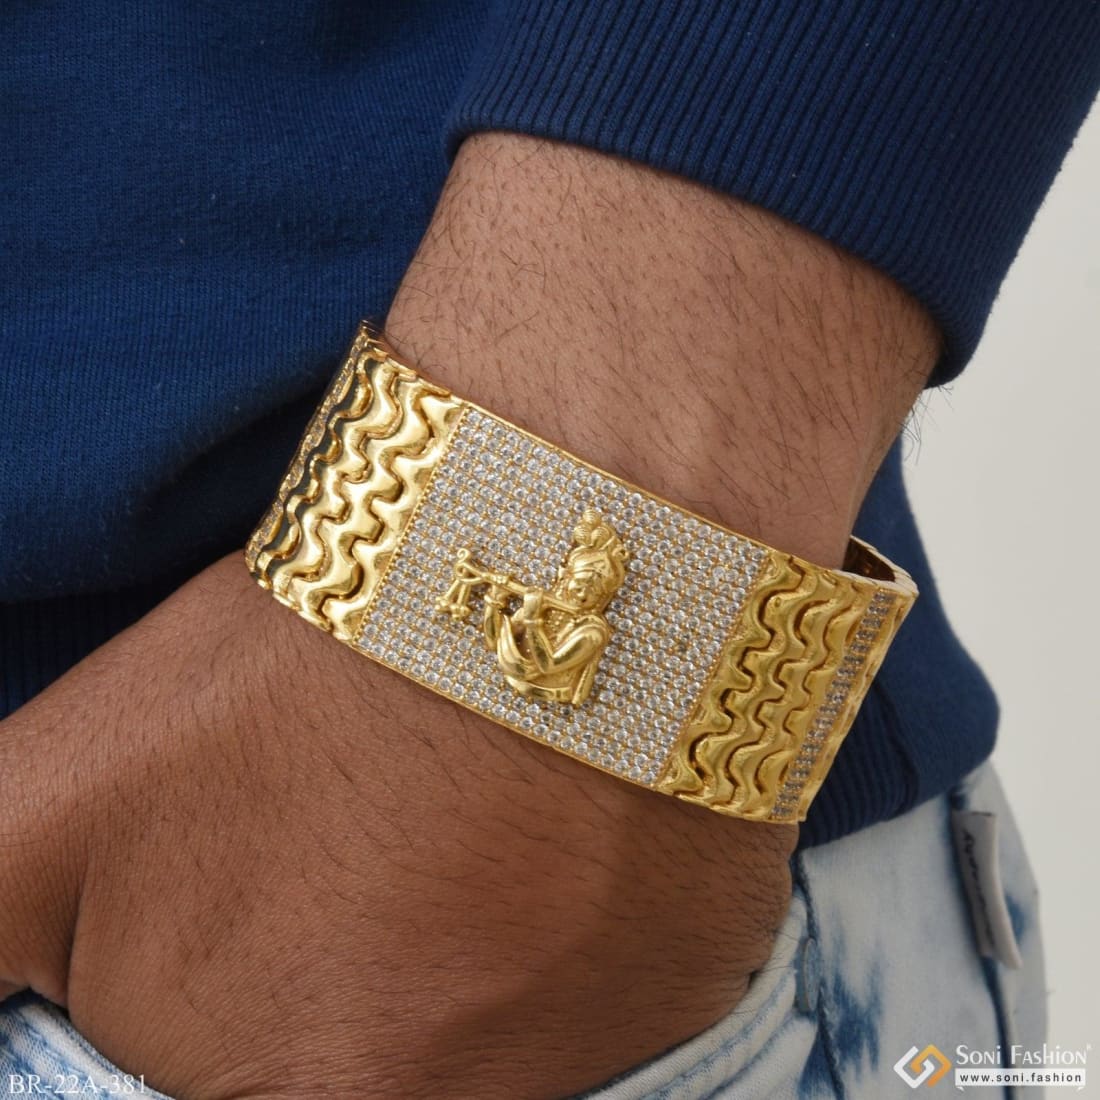 B11202 Daily Wear Jewellery Colour Light Matte Gold Finish Imitation Bangles  Online | JewelSmart.in